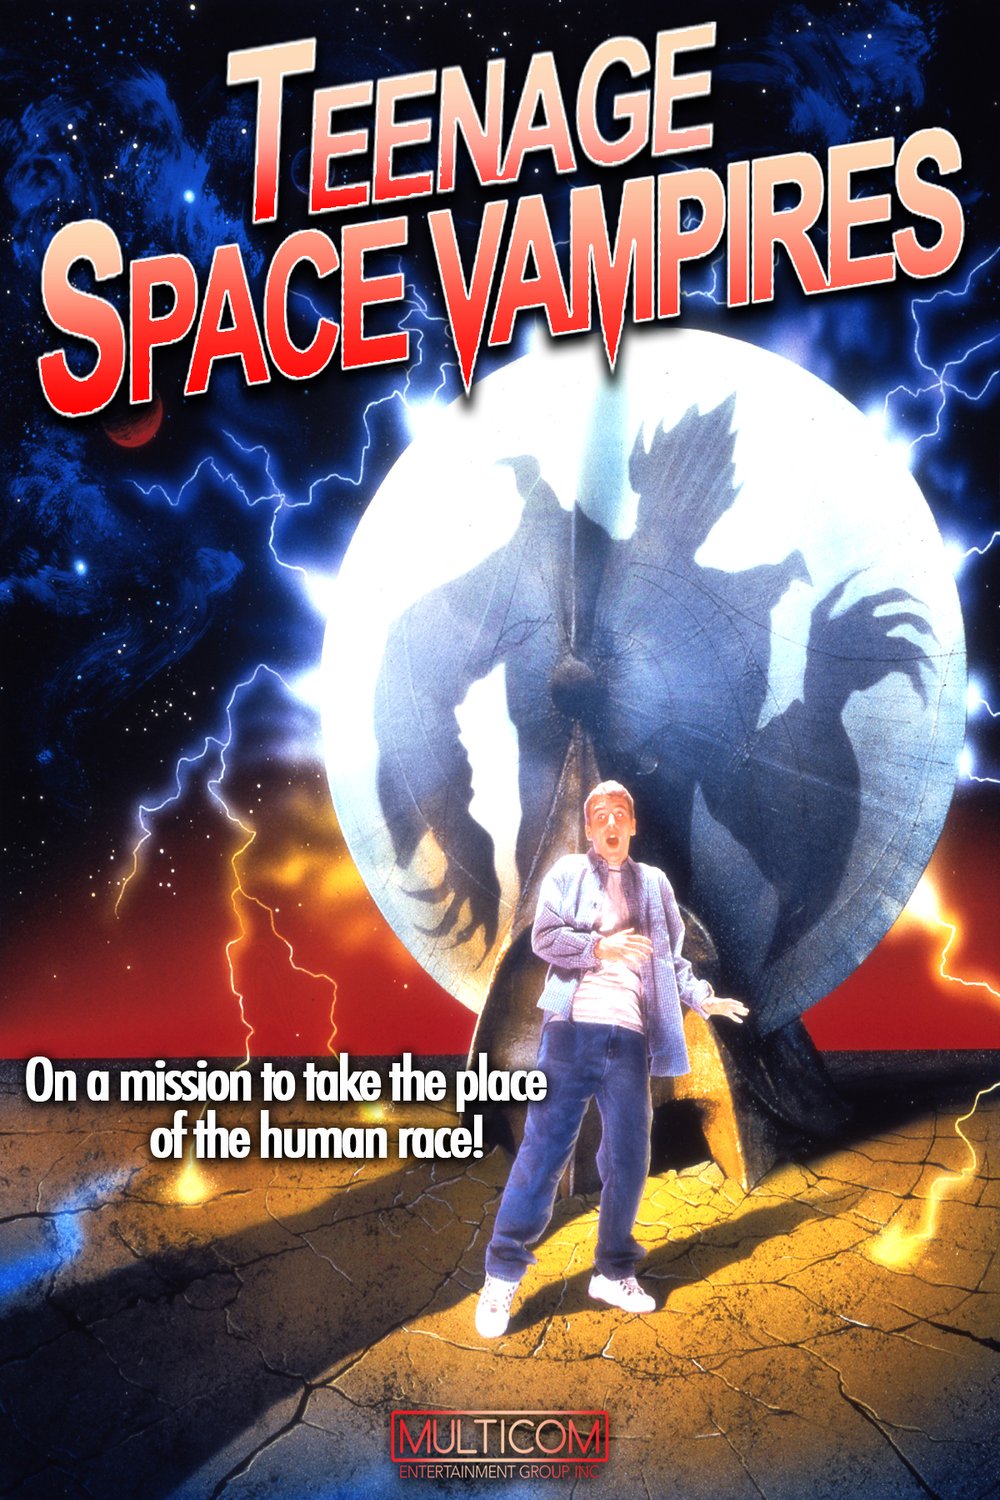 Poster of the movie Teenage Space Vampires